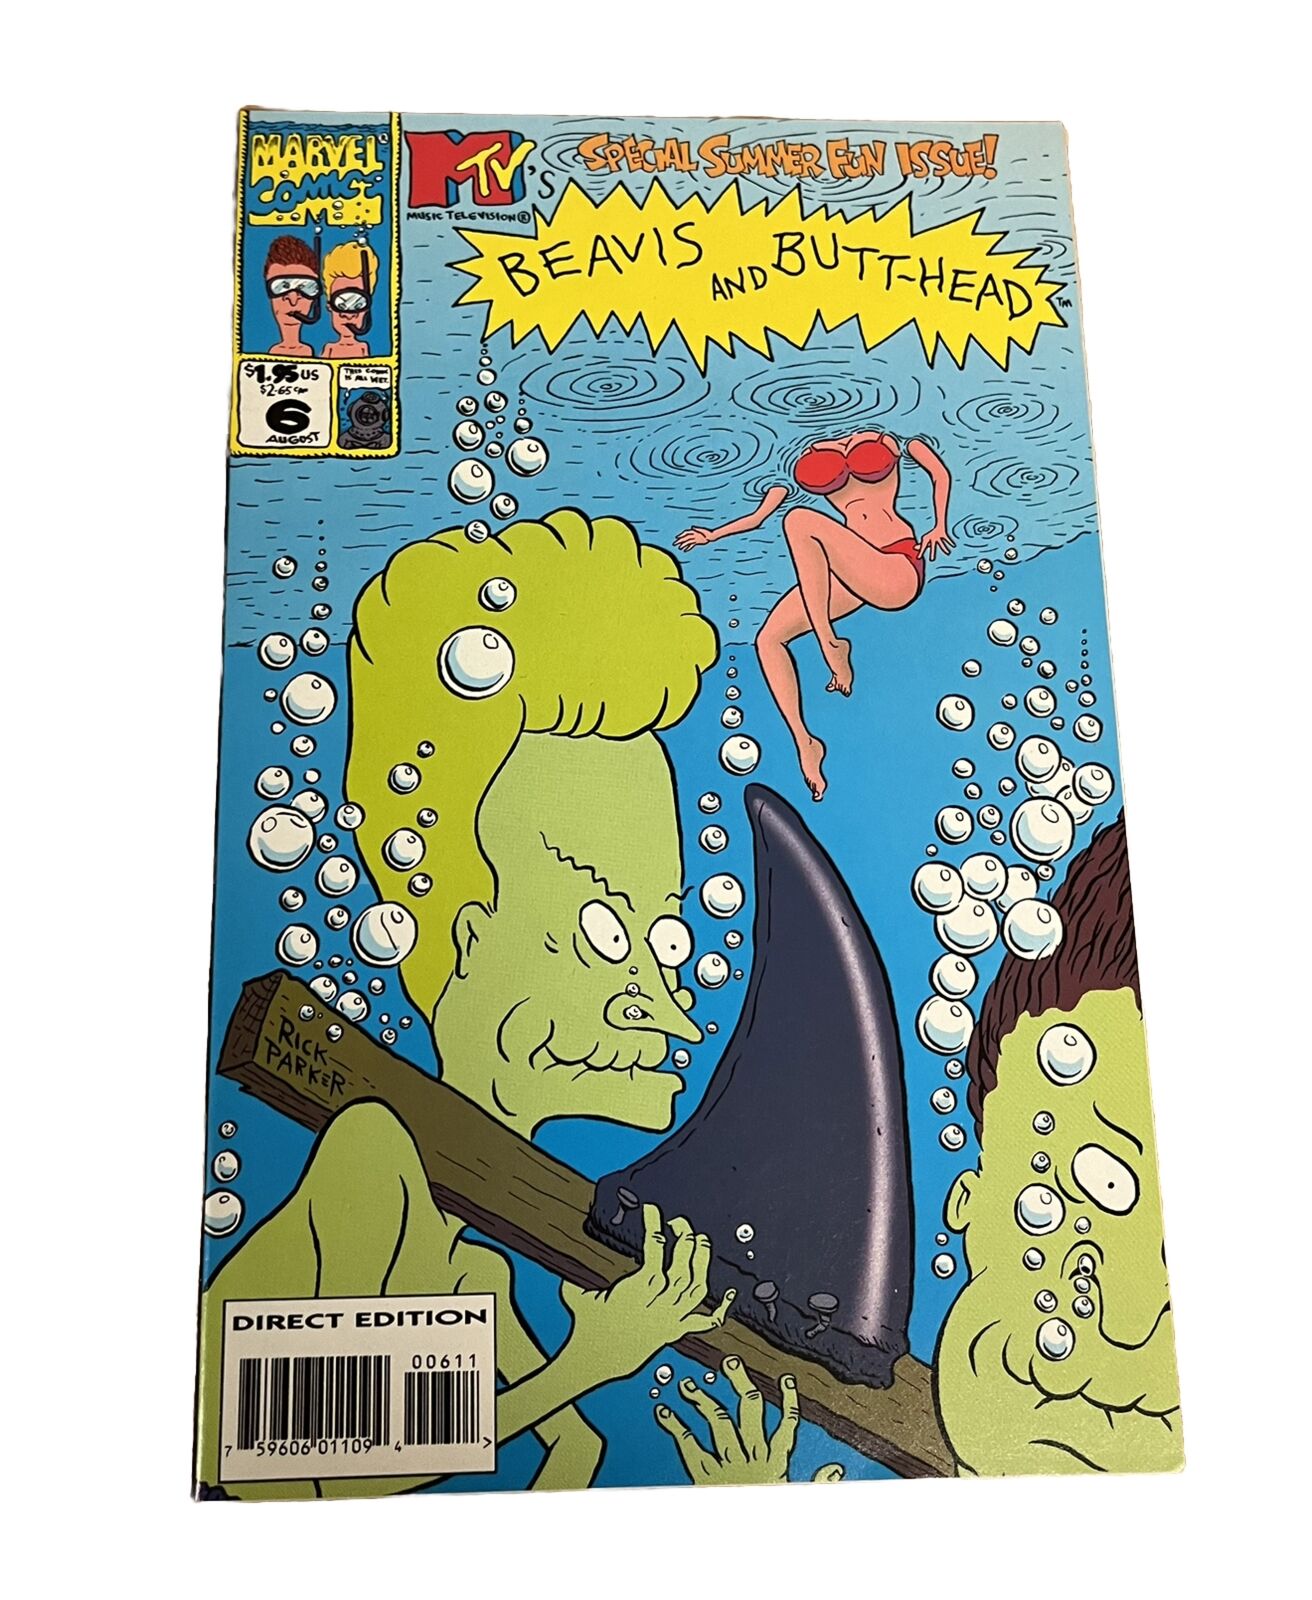 Beavis and Butthead Comic Book Issue #6 Marvel MTV 1994 Cartoon TV Show 90s